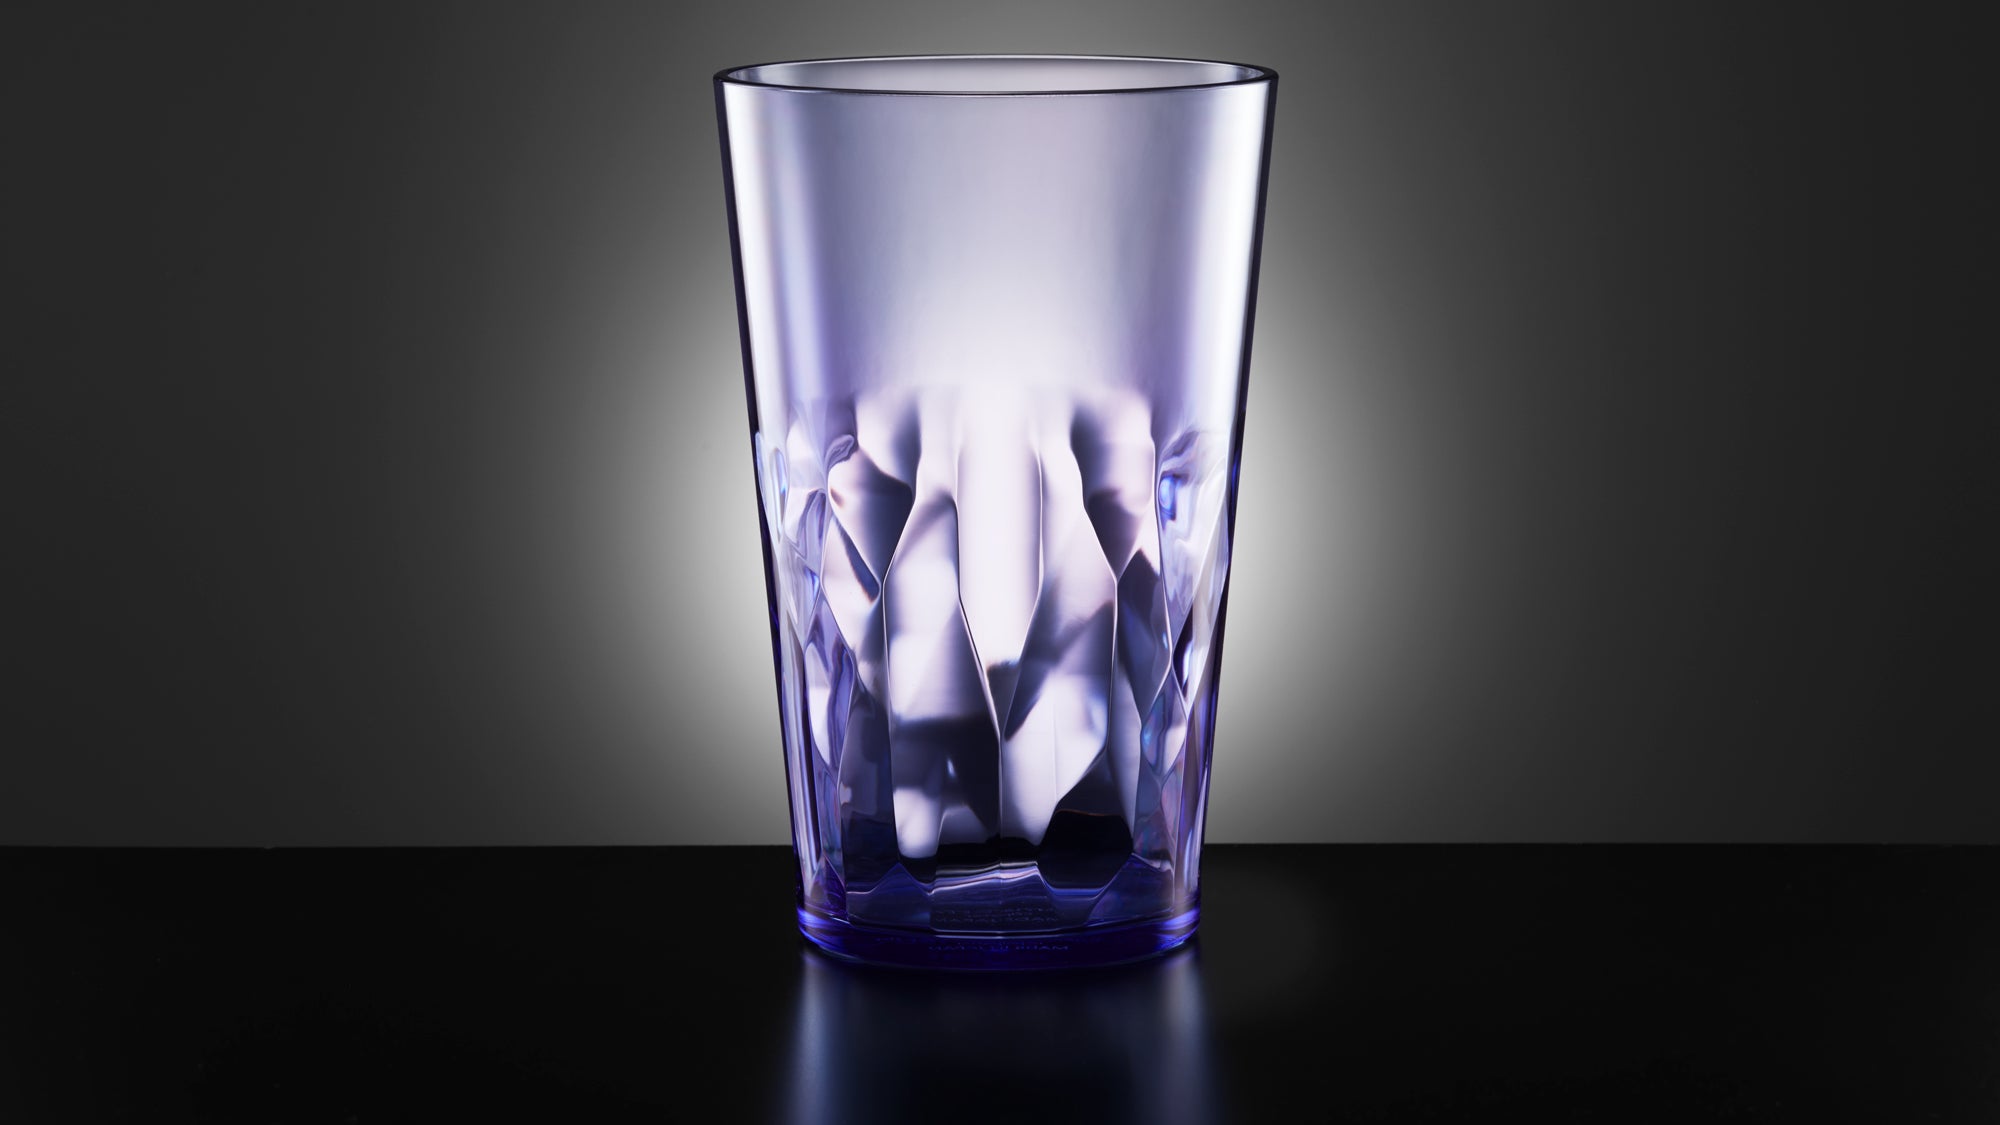 19 oz Unbreakable Premium Drinking Glasses - Set of 6 - Tritan Plastic -  SCANDINOVIA - USA